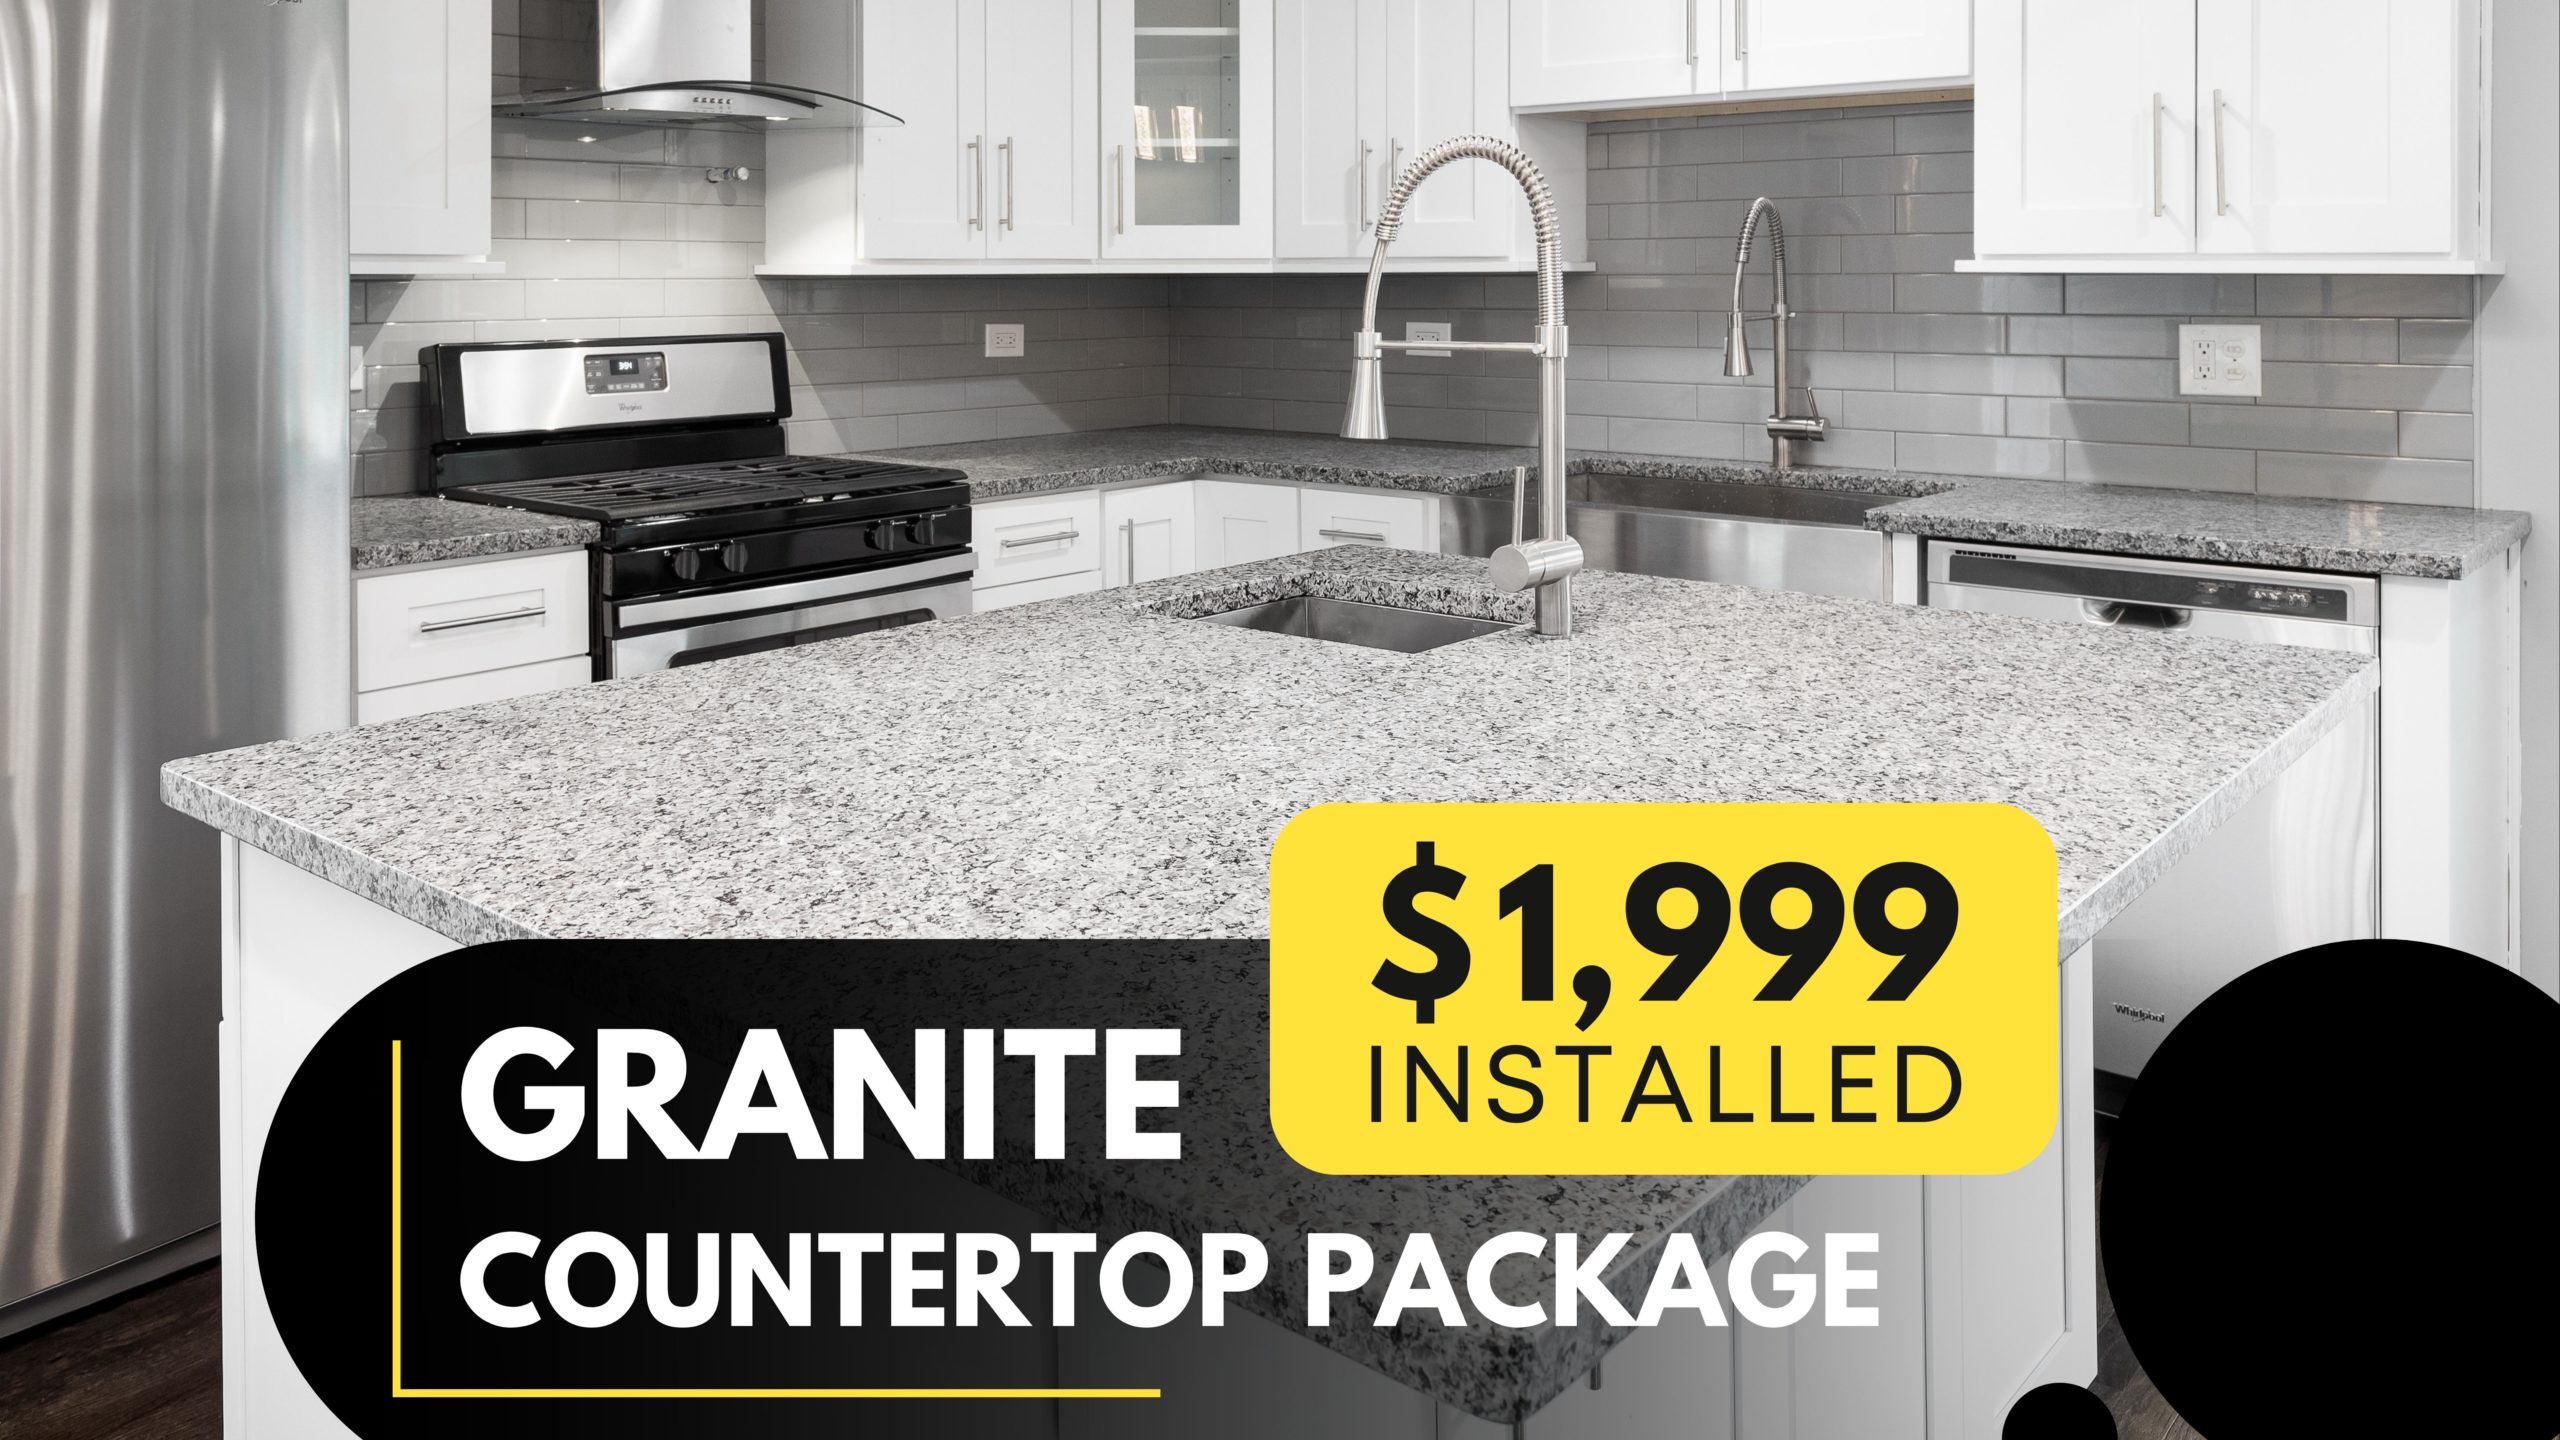 GE of Louisville - Youtube Cover - Granite countertop package